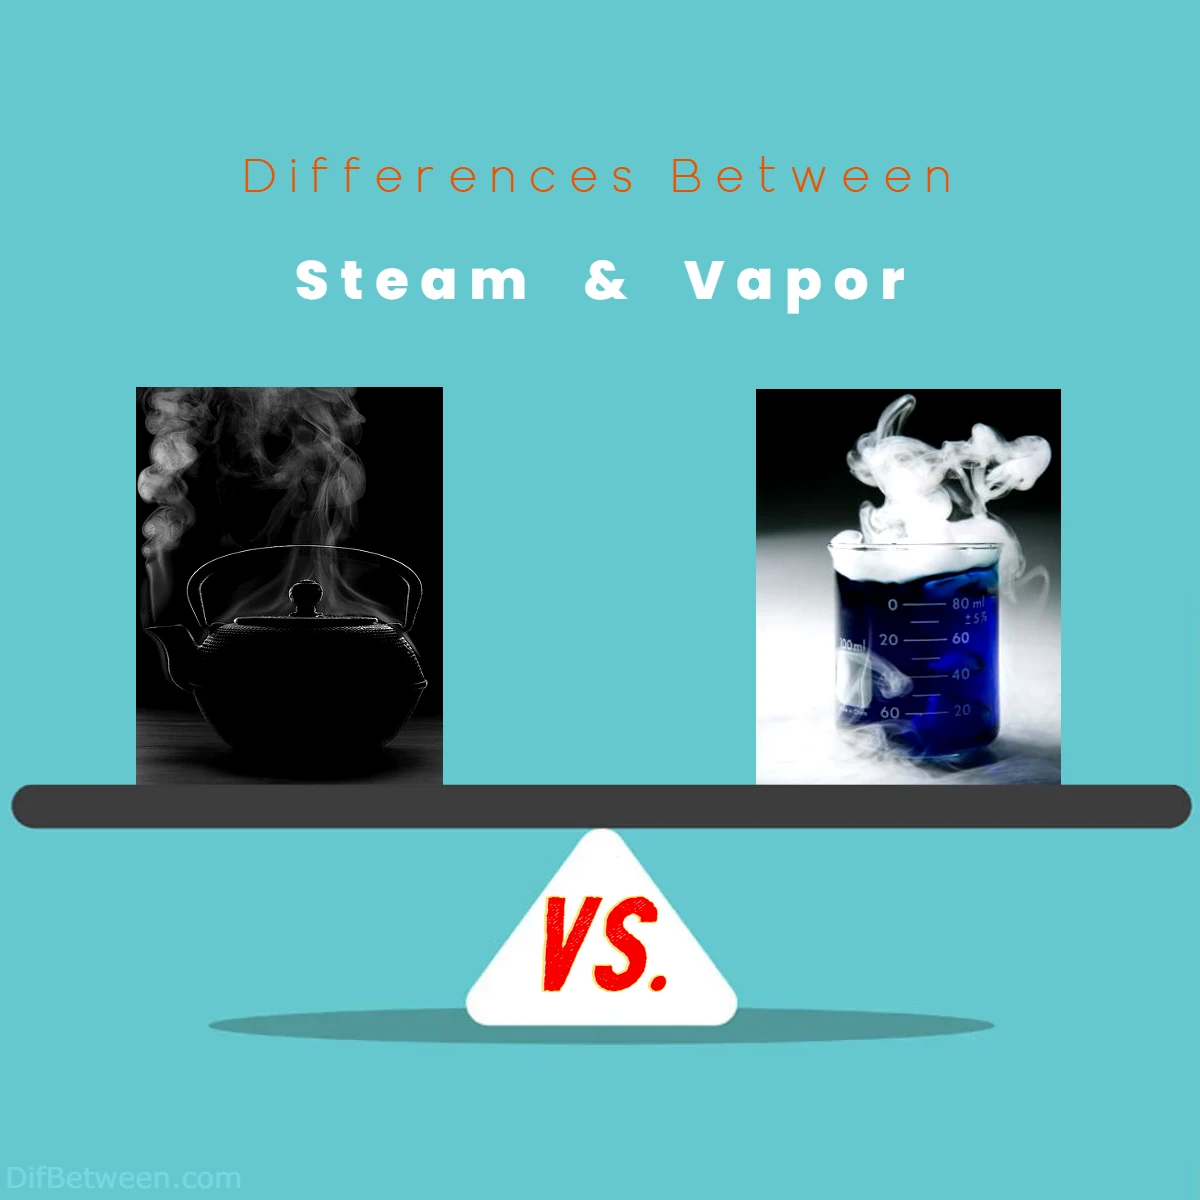 Differences Between Steam vs Vapor